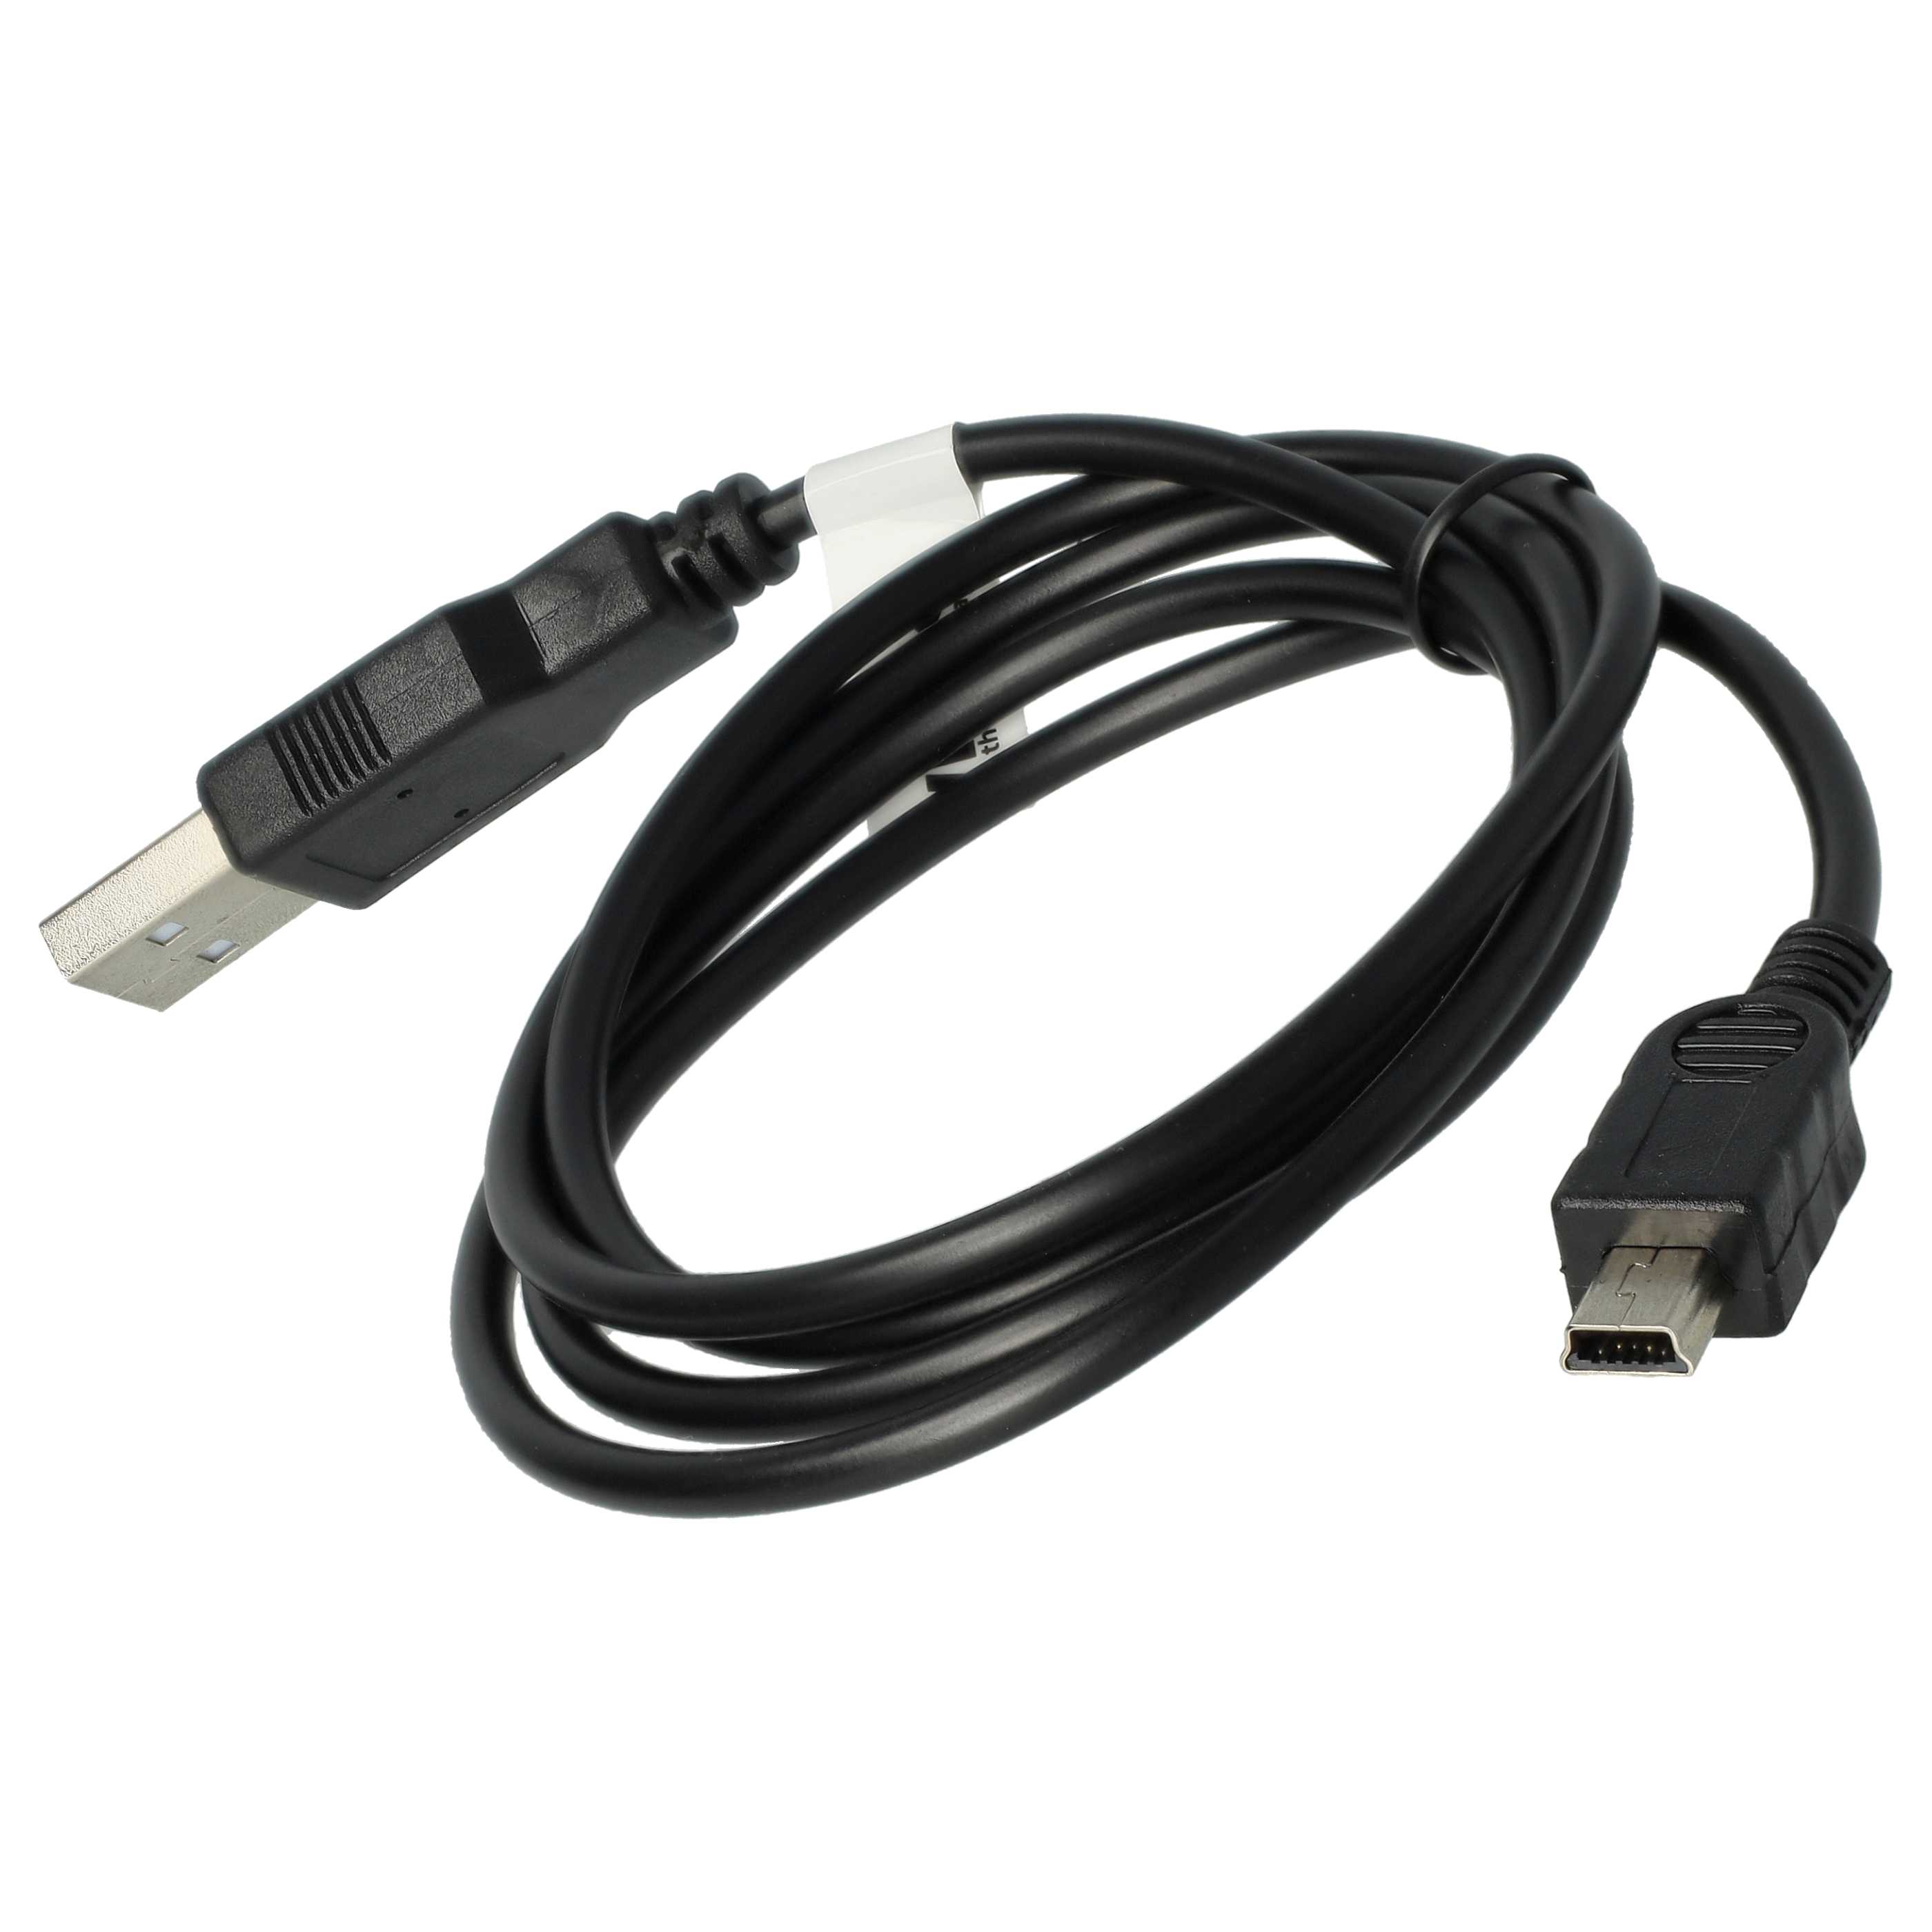 USB Datenkabel passend für Cect Kamera u.a. - 100 cm